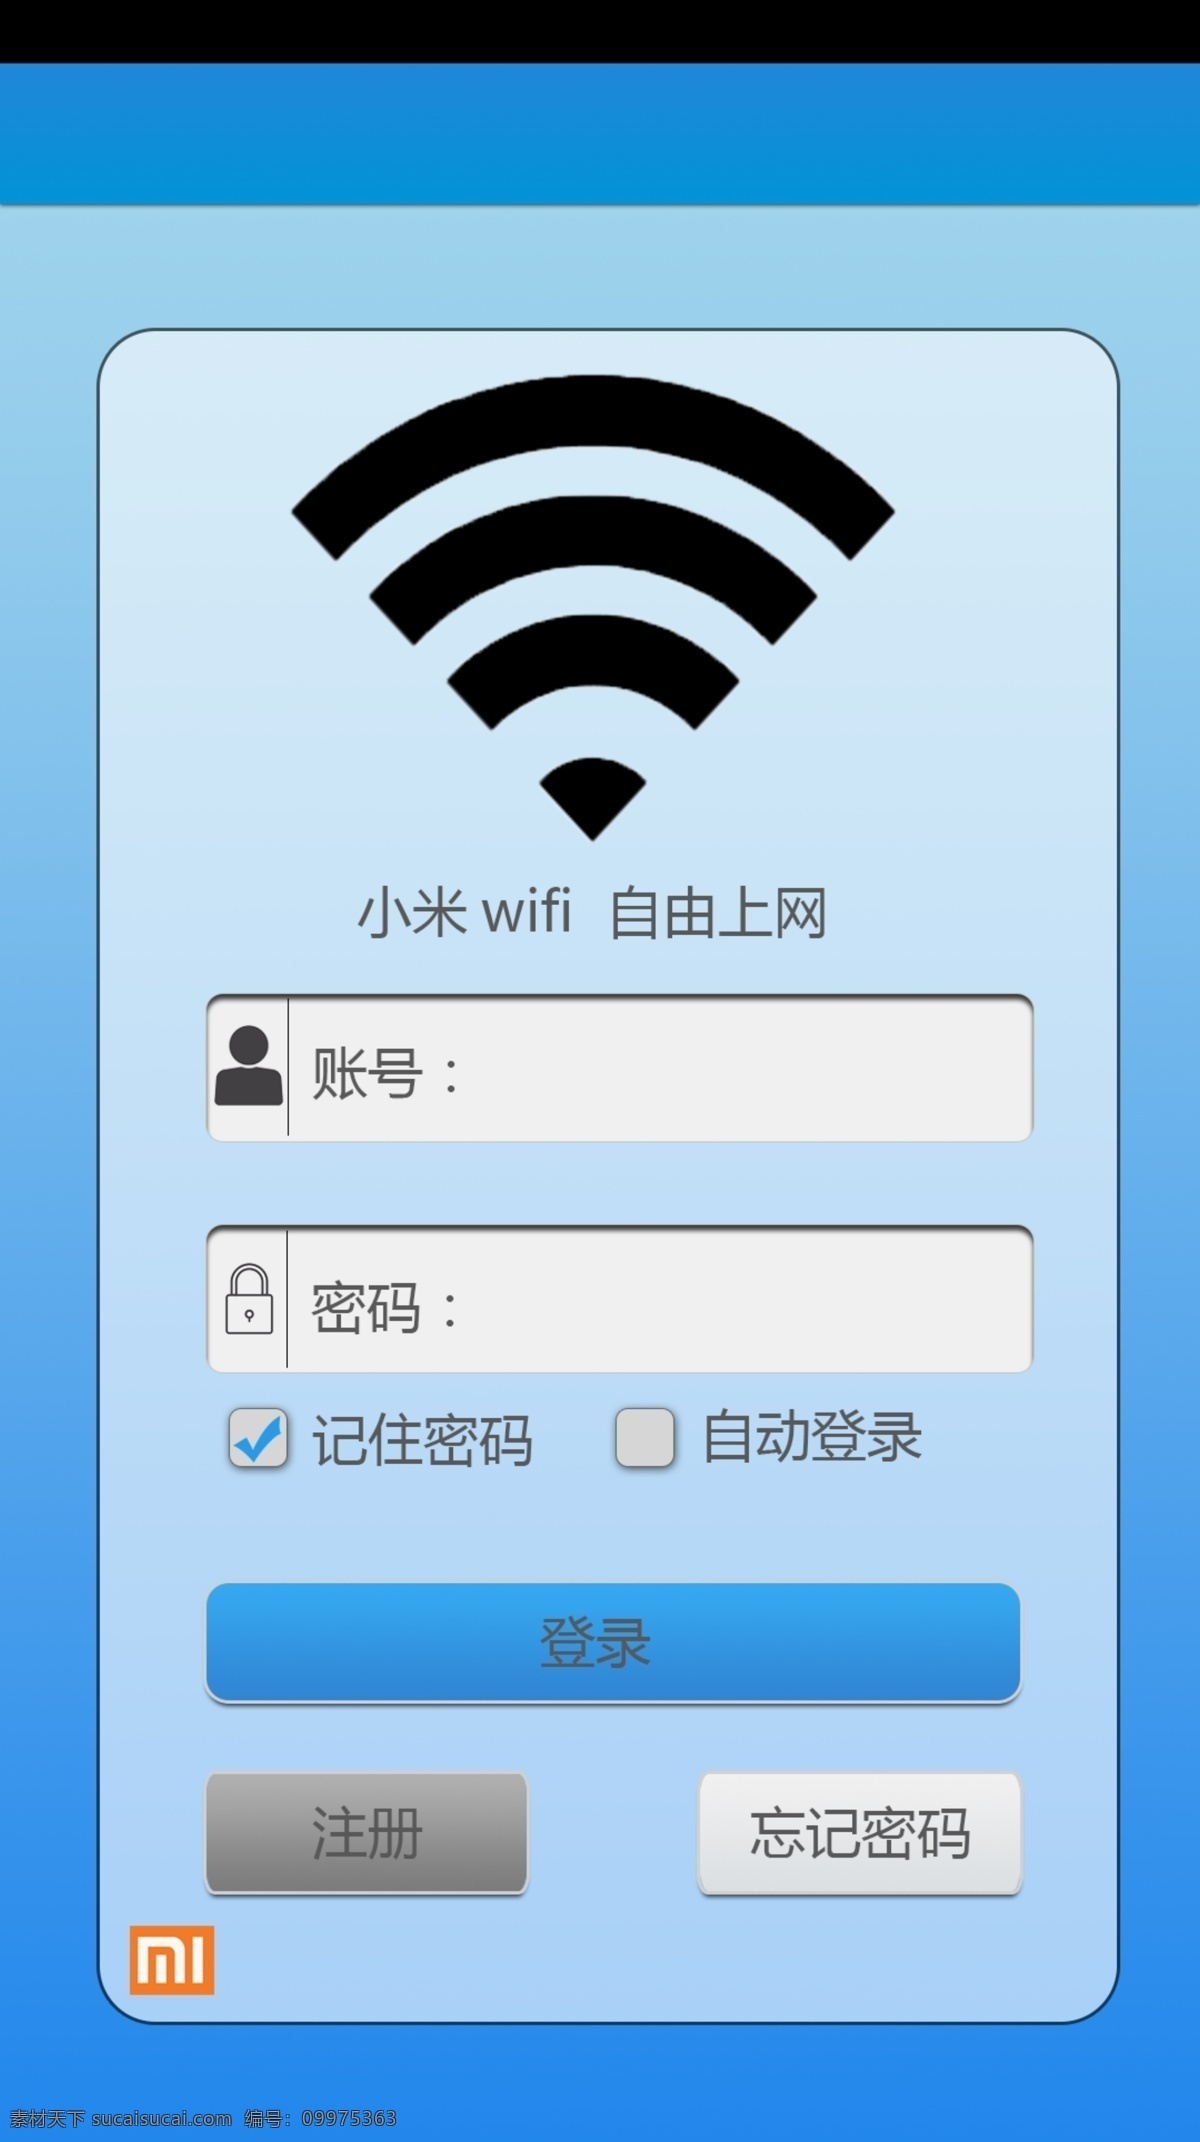 wifi共享 wifi 共享 小米wifi 手机app 界面设计 分层